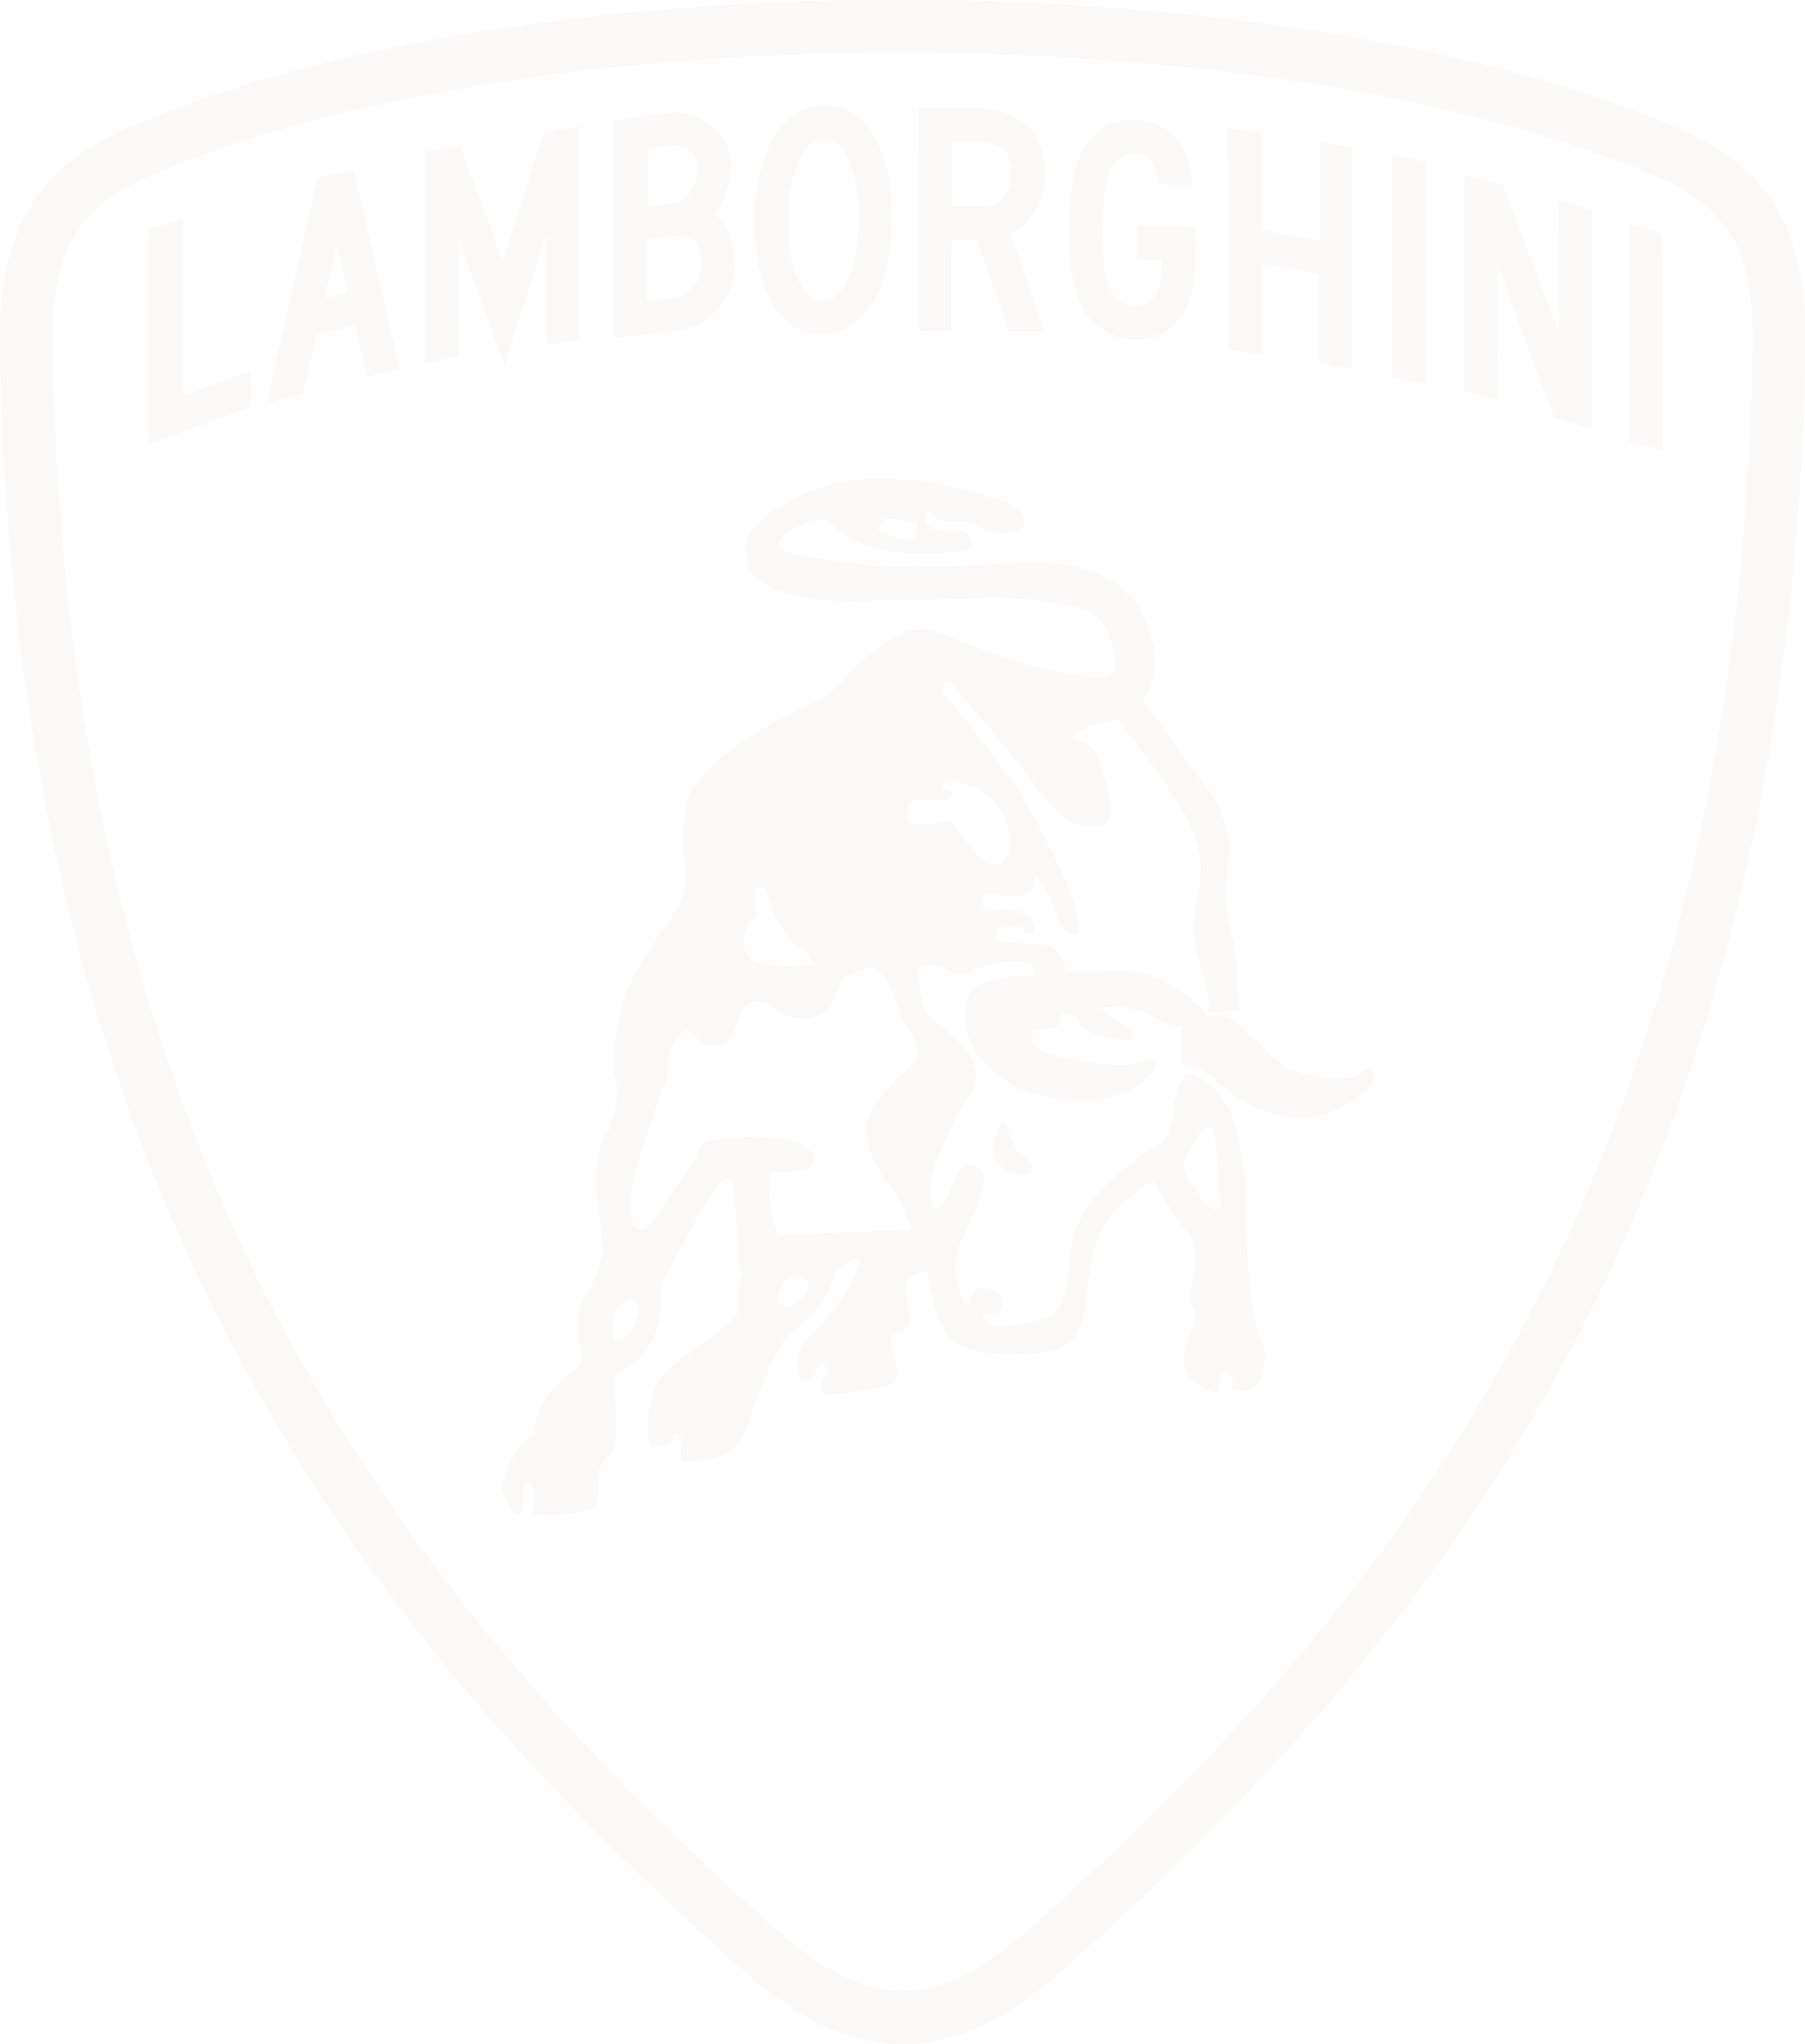 How to Draw the Lamborghini Logo (symbol)